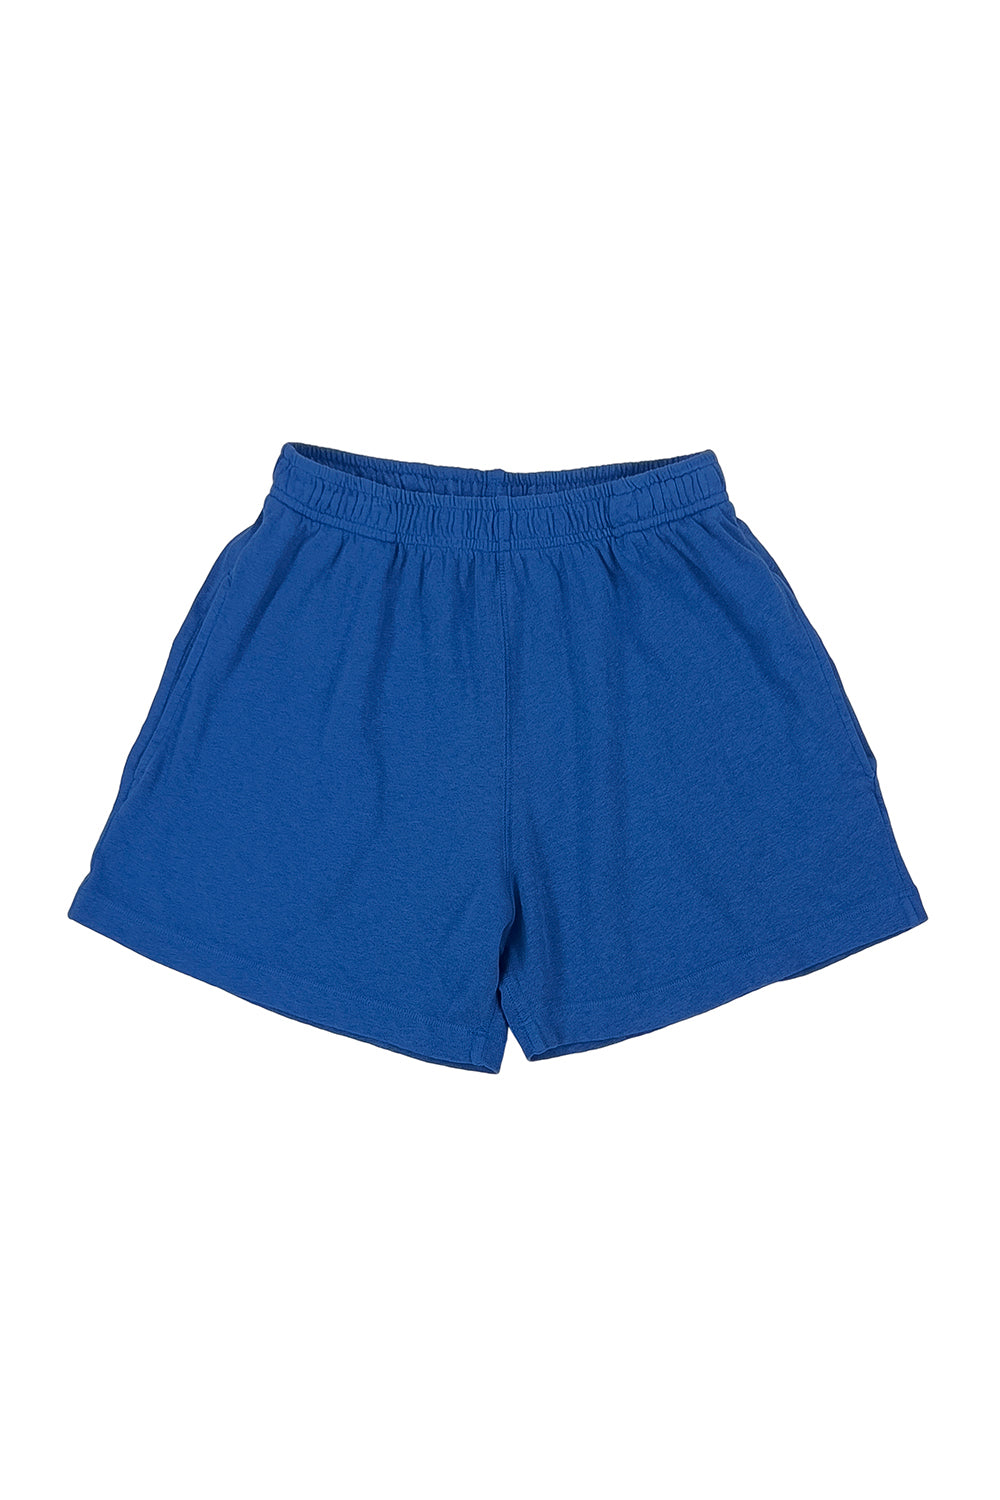 Sun Short | Jungmaven Hemp Clothing & Accessories / Color: Galaxy Blue